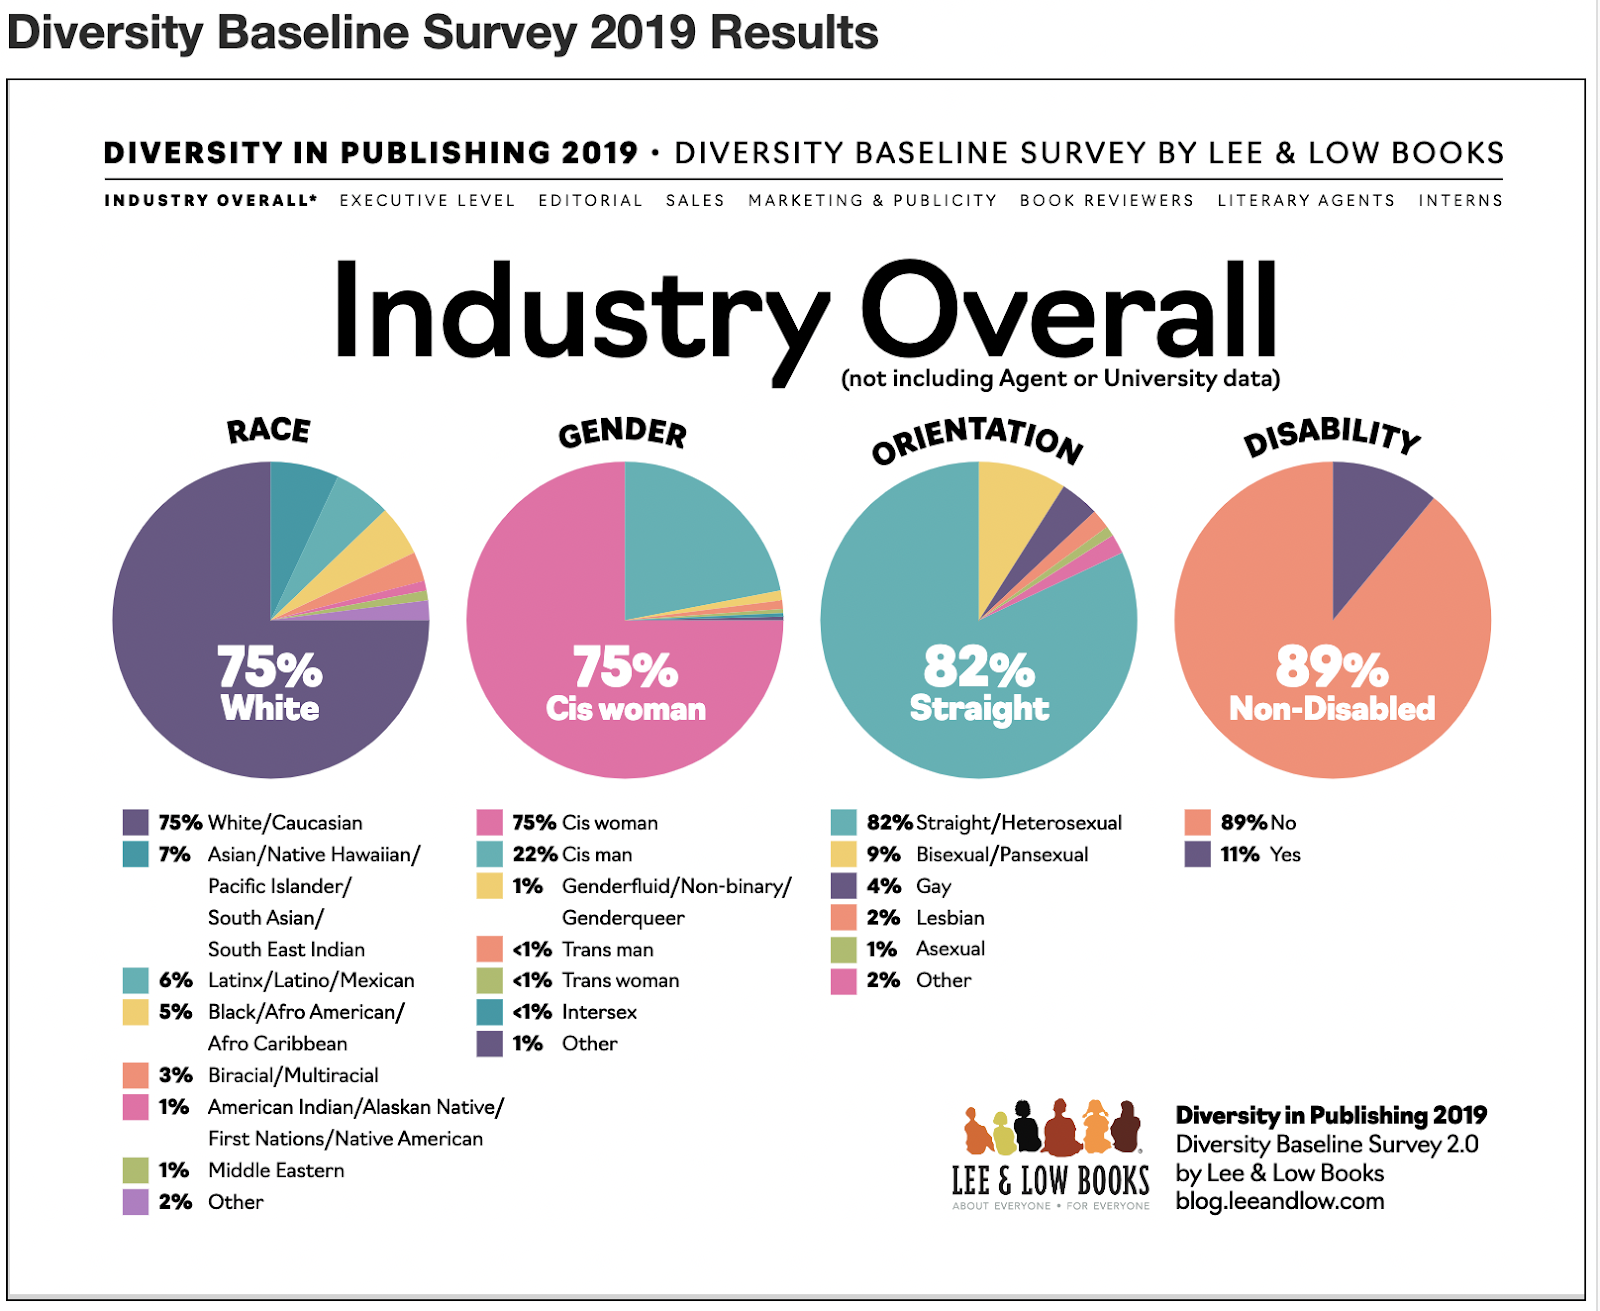 Diversity Baseline Survey 2019 Results via Lee & Low Books